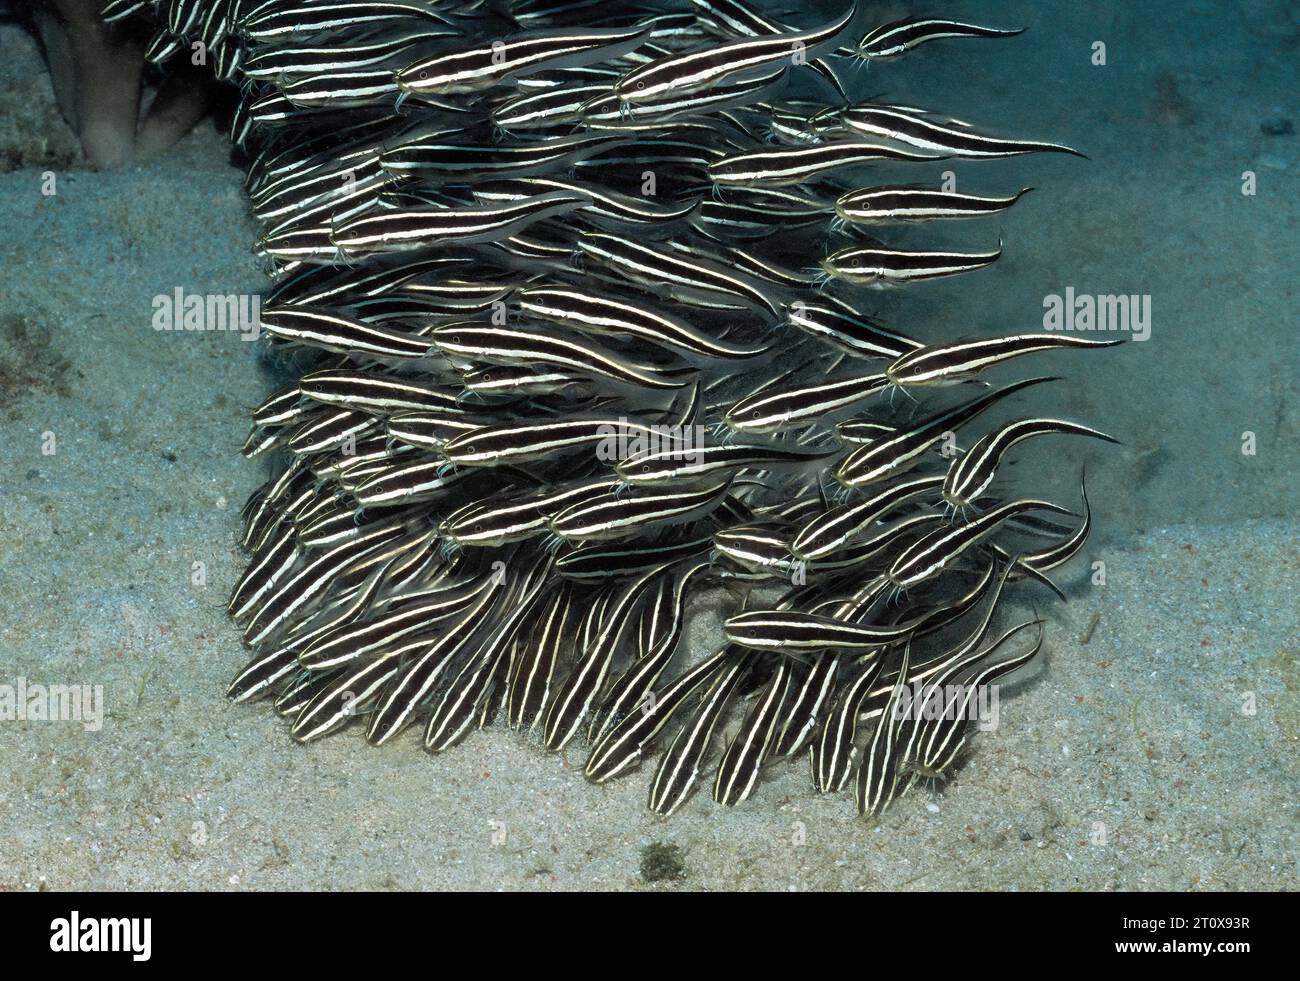 Group Shoal of venomous striped eel catfish (Plotosus lineatus